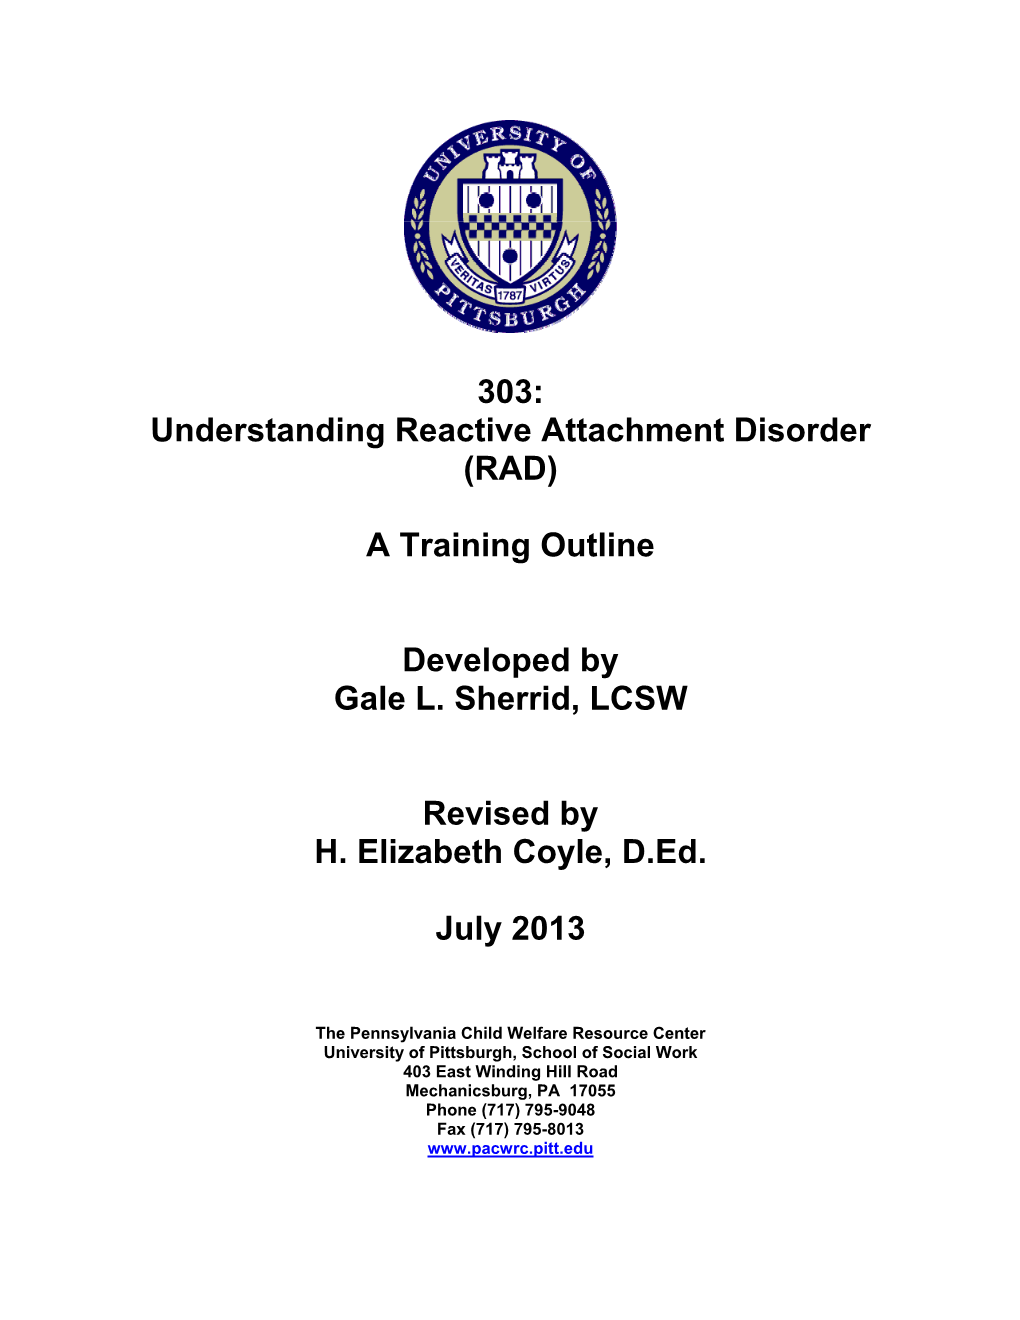 303: Understanding Reactive Attachment Disorder (RAD) A